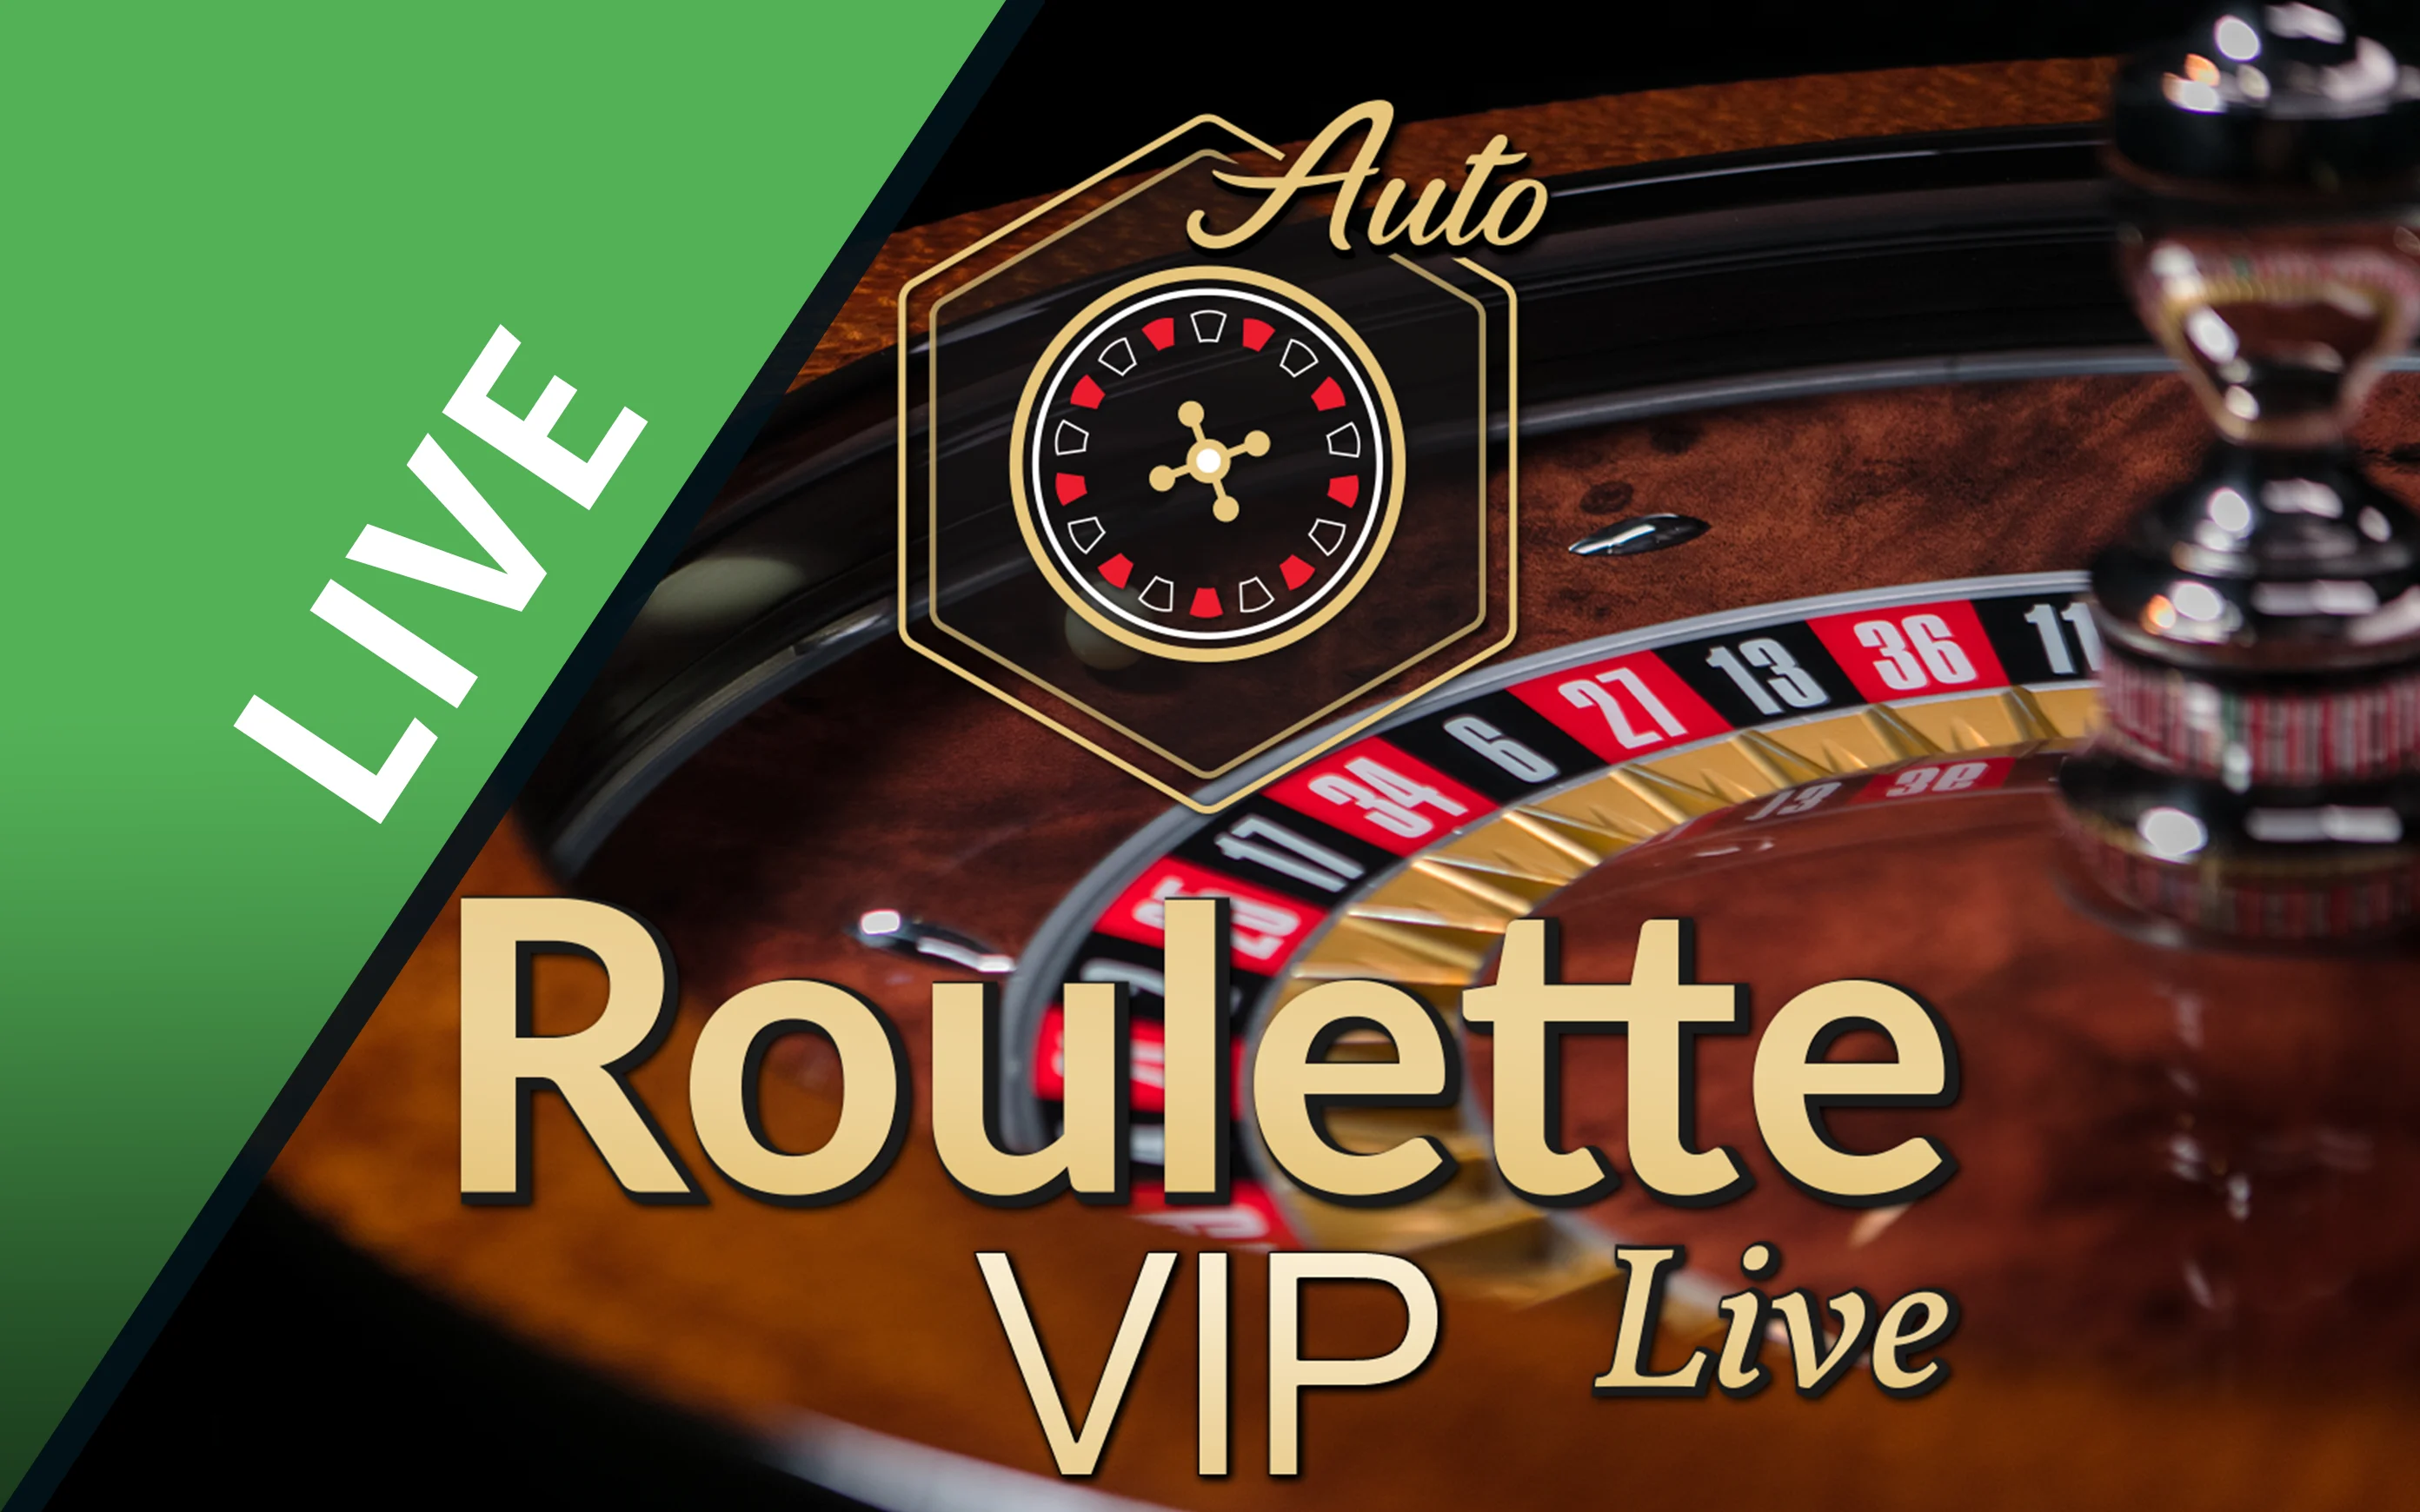 Грайте у Auto Roulette VIP в онлайн-казино Starcasino.be